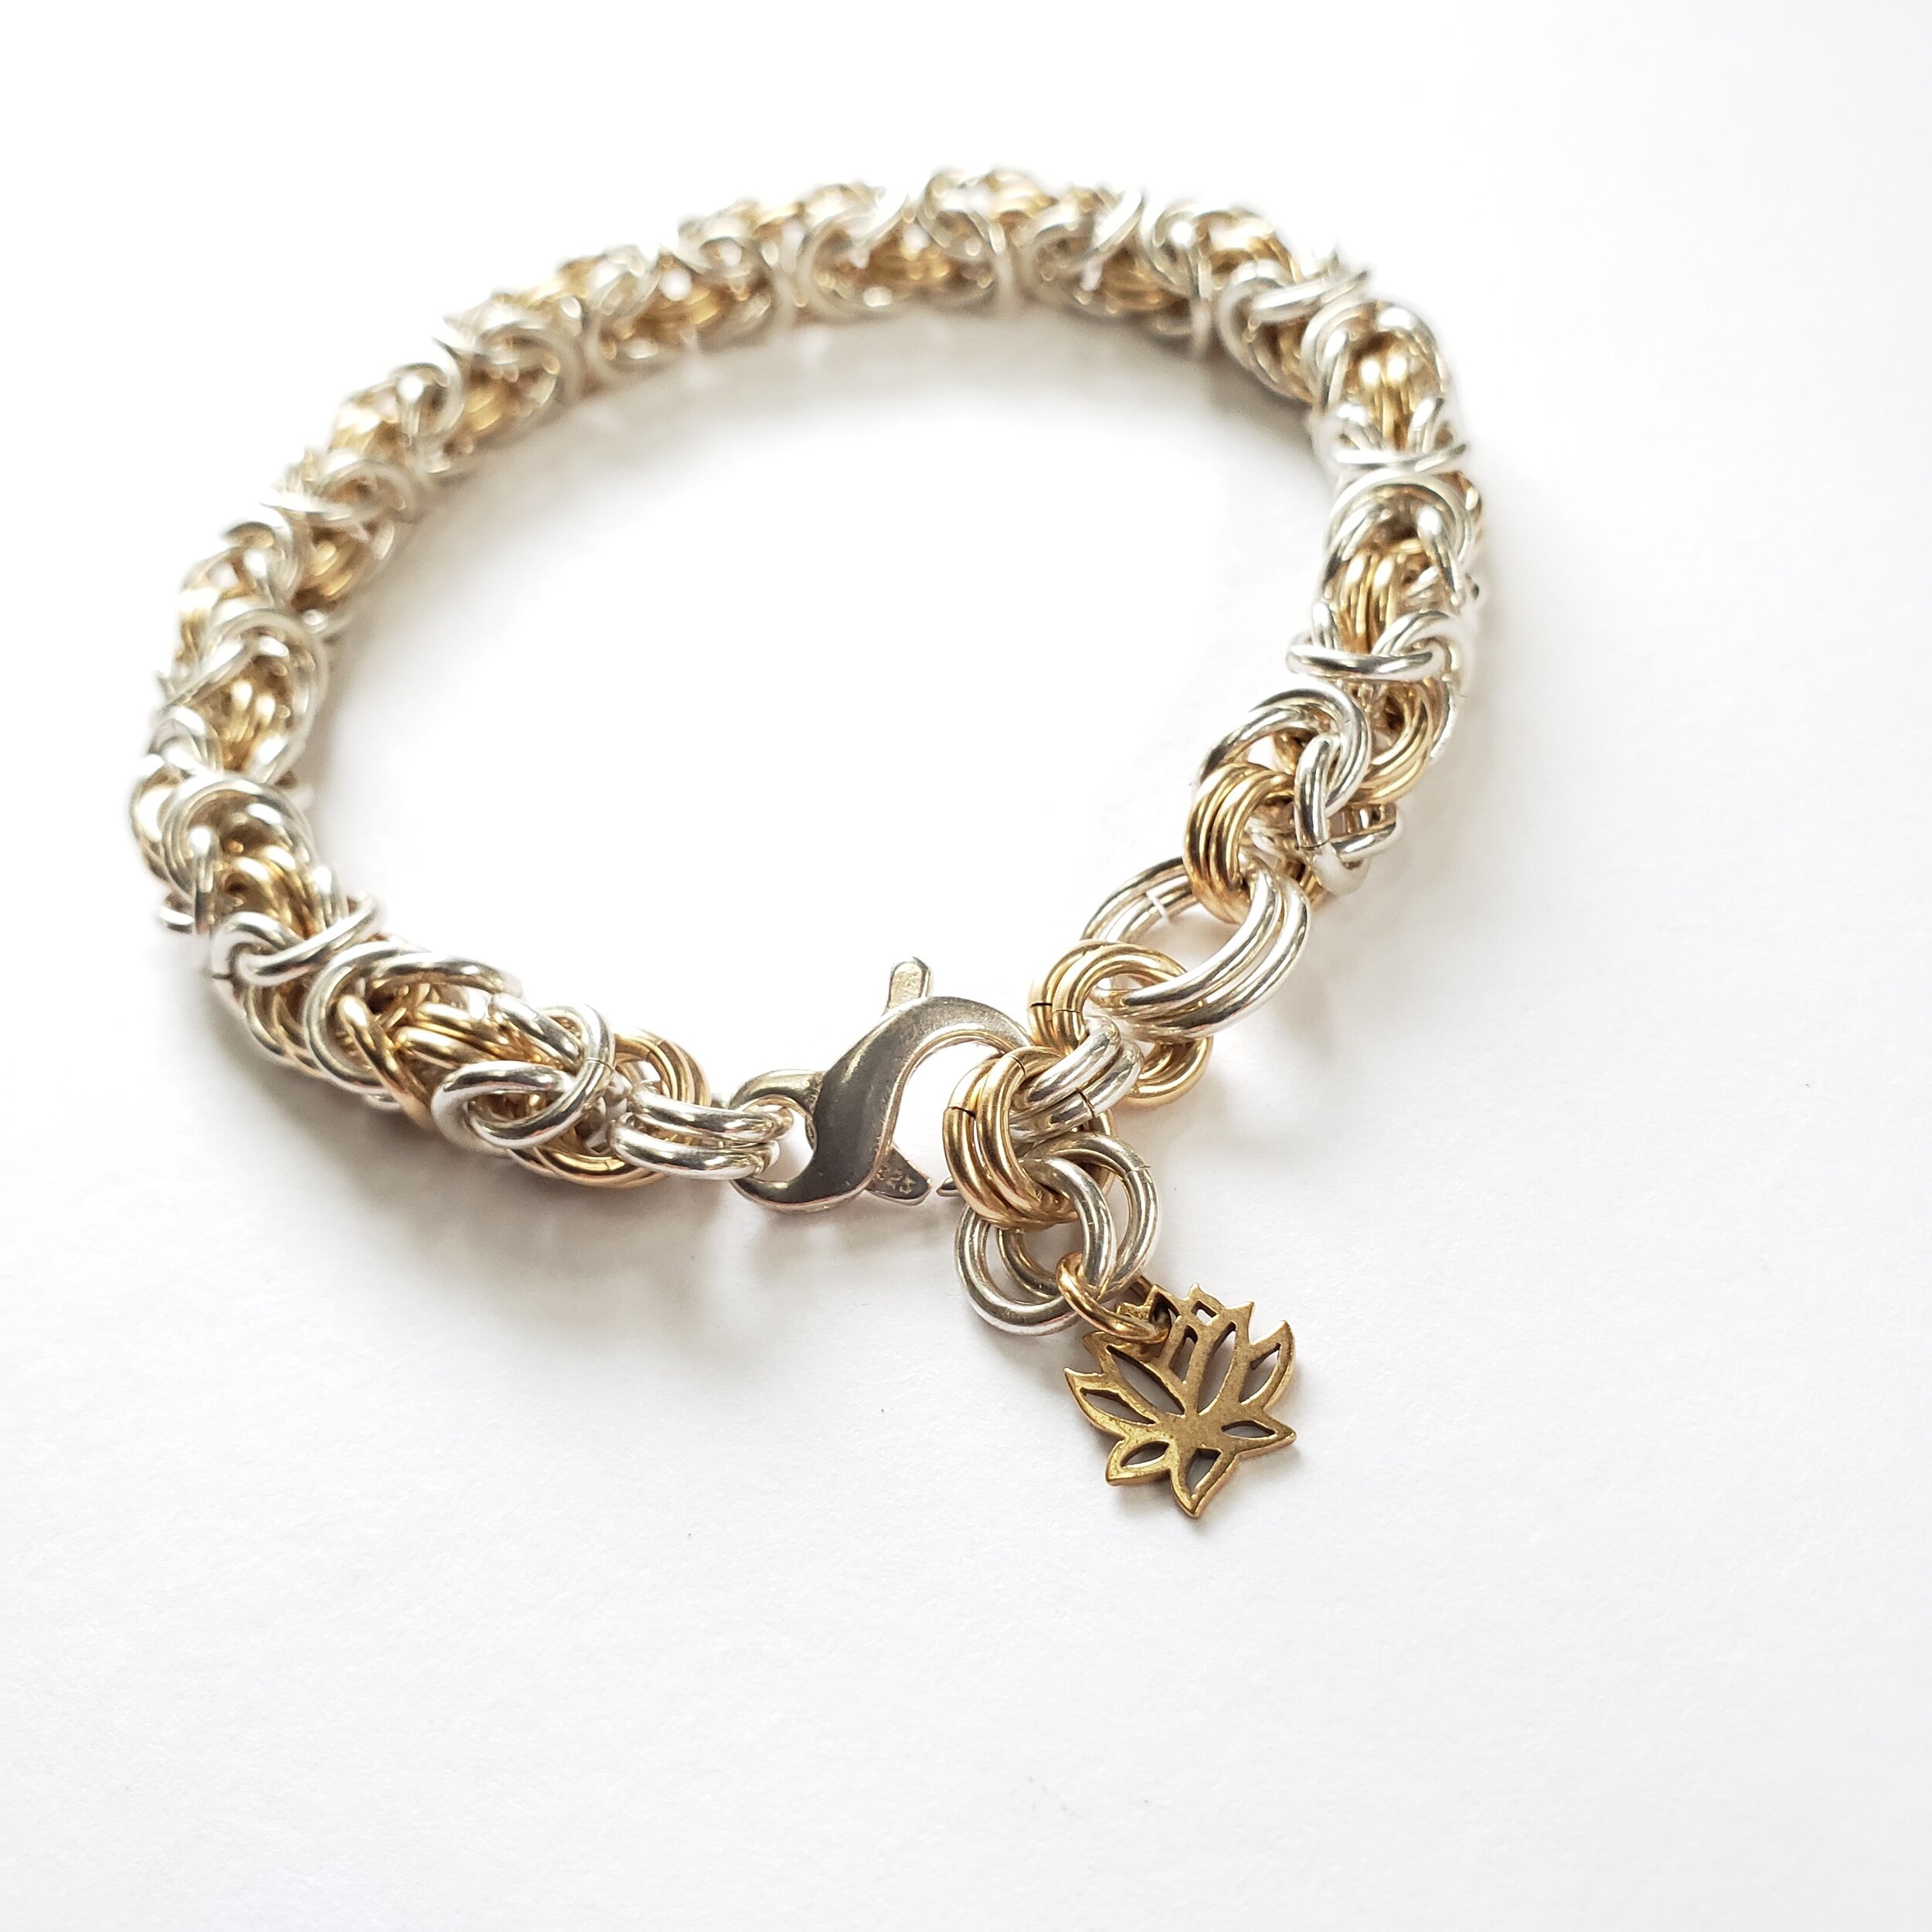 Byzantine Link Bracelet Chain Chain Maille Bracelet Sieraden Armbanden Schakelarmbanden Byzantine Chain Maille Bracelet Byzantine Weave Byzantine 14K Gold-Filled Bracelet 